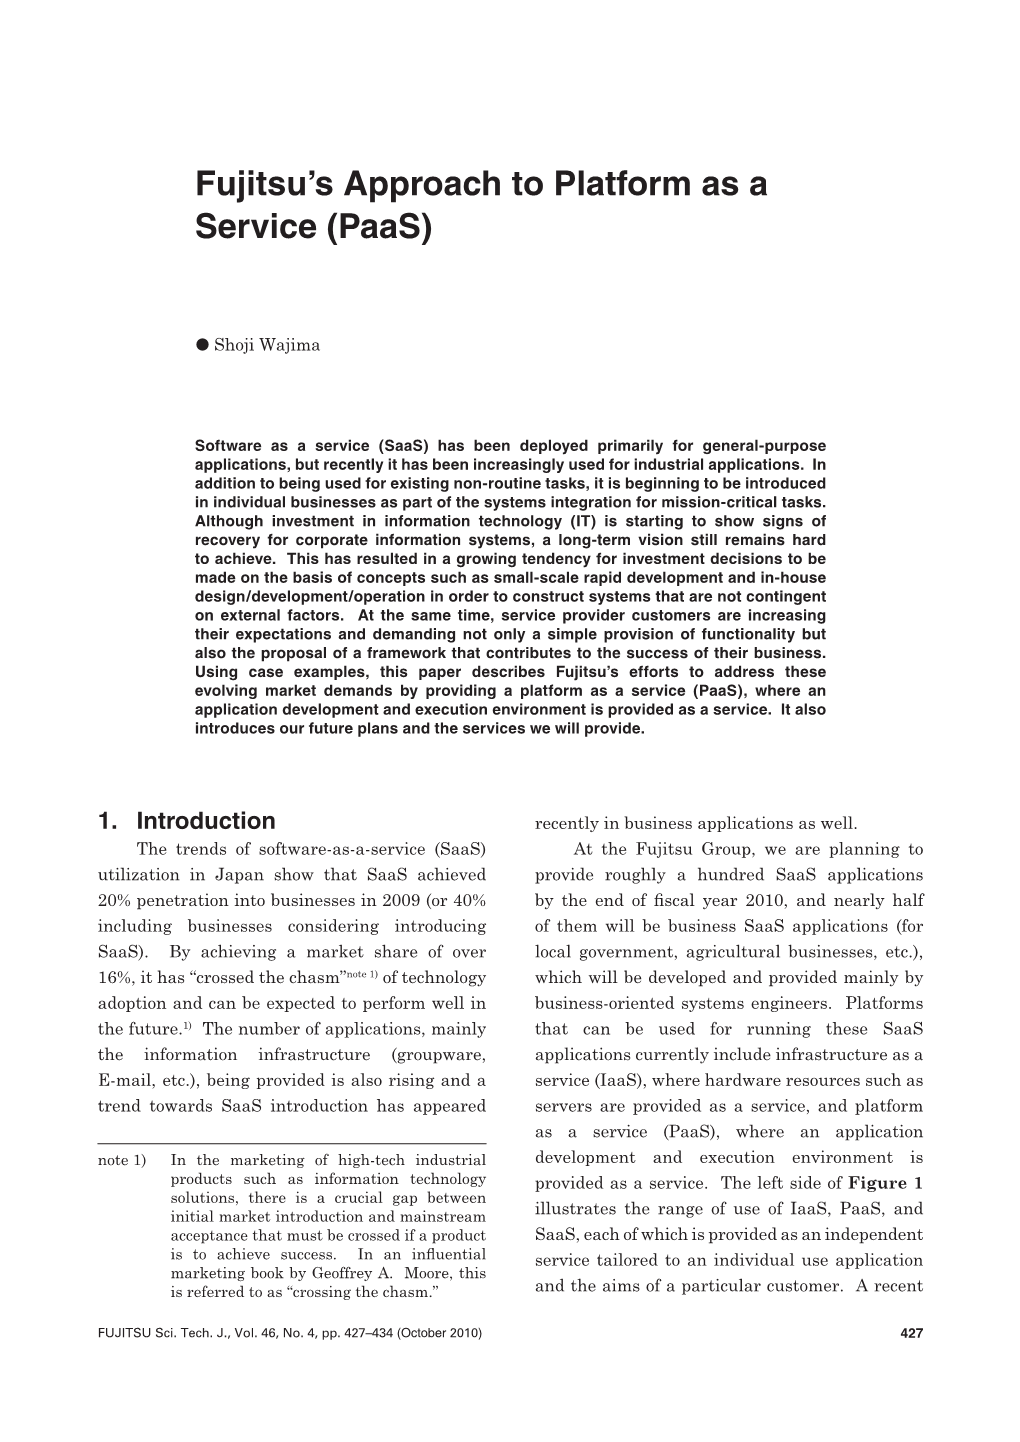 Fujitsu's Approach to Platform As a Service (Paas)